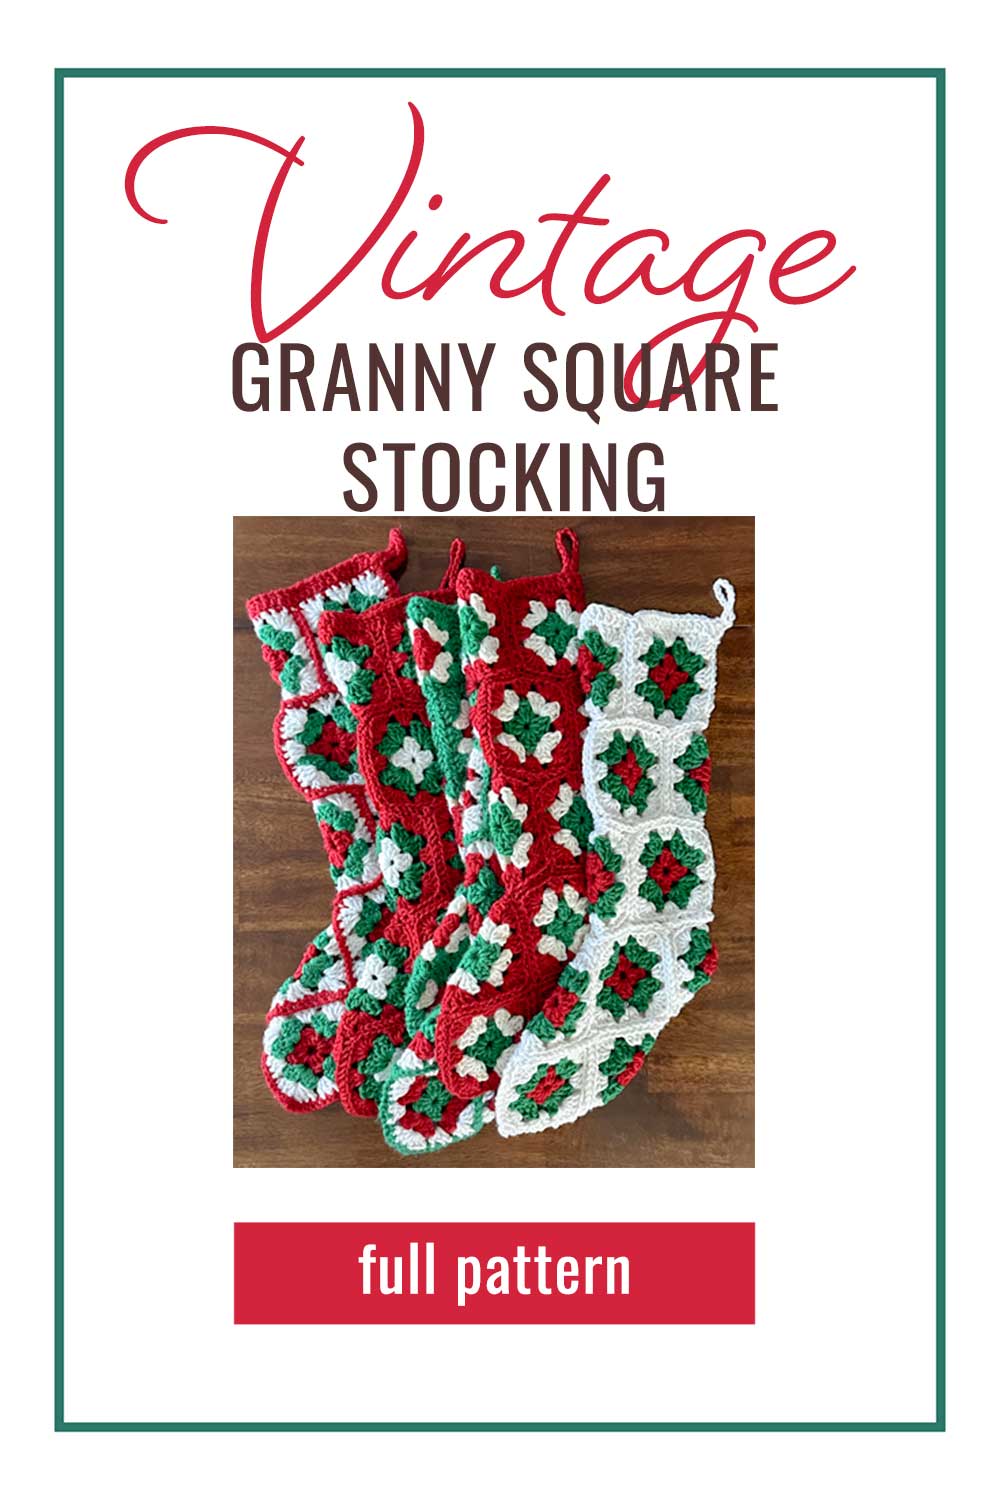 Crochet Christmas Granny Stitch: Crochet pattern